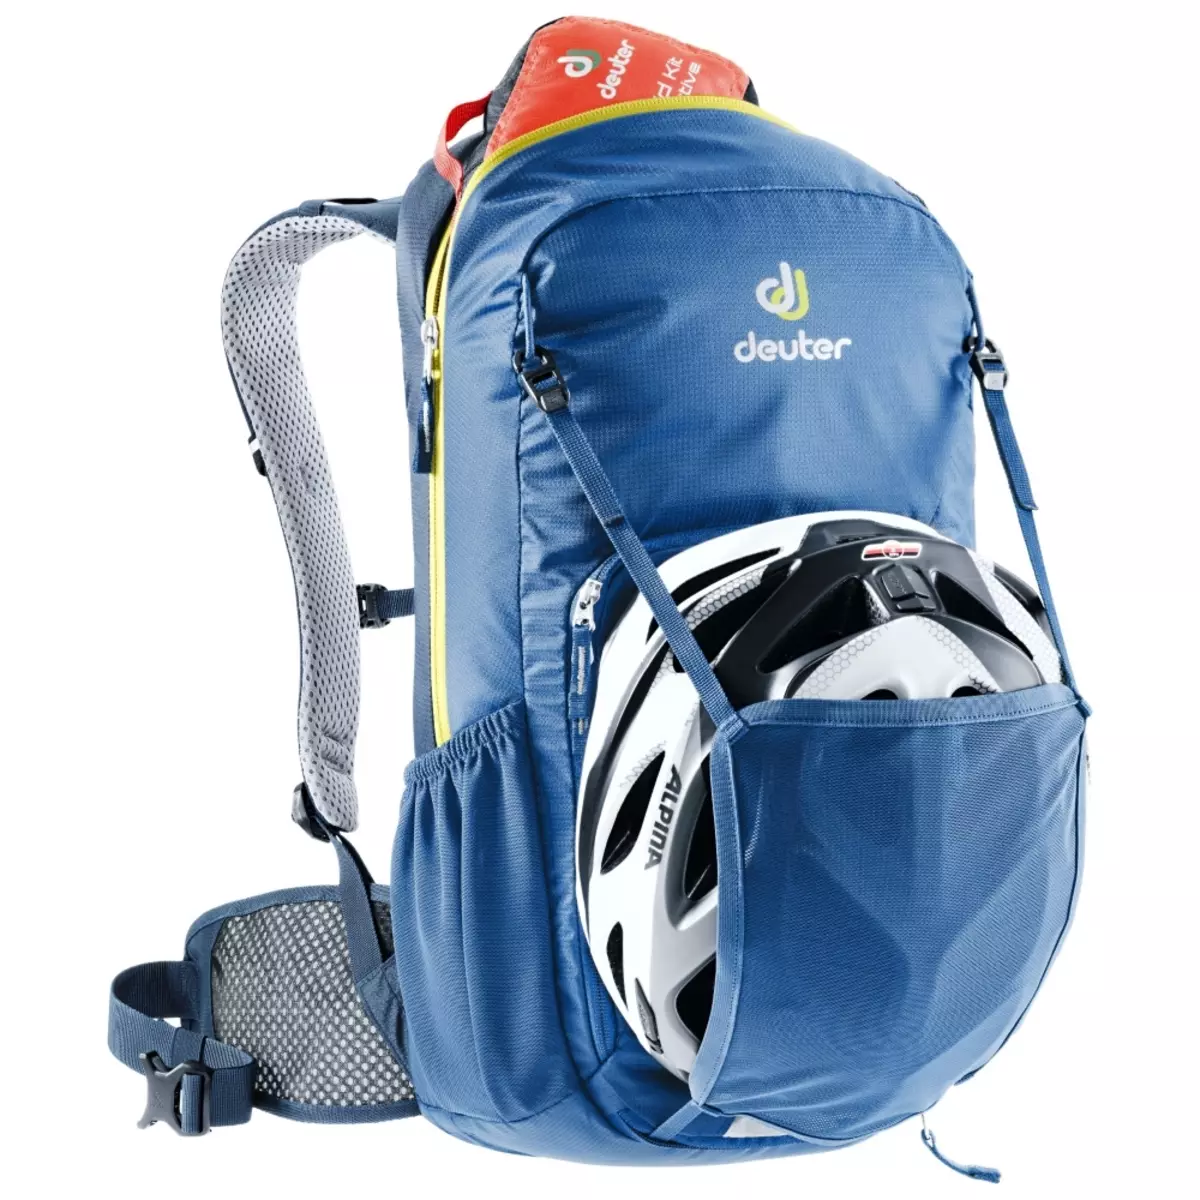 Velorryukzak: Odaberite ruksak na prtljažniku bicikla i na poleđini bicikliste, biciklističke ruksak Deuter, ciklotech, thule i drugi modeli 20506_20